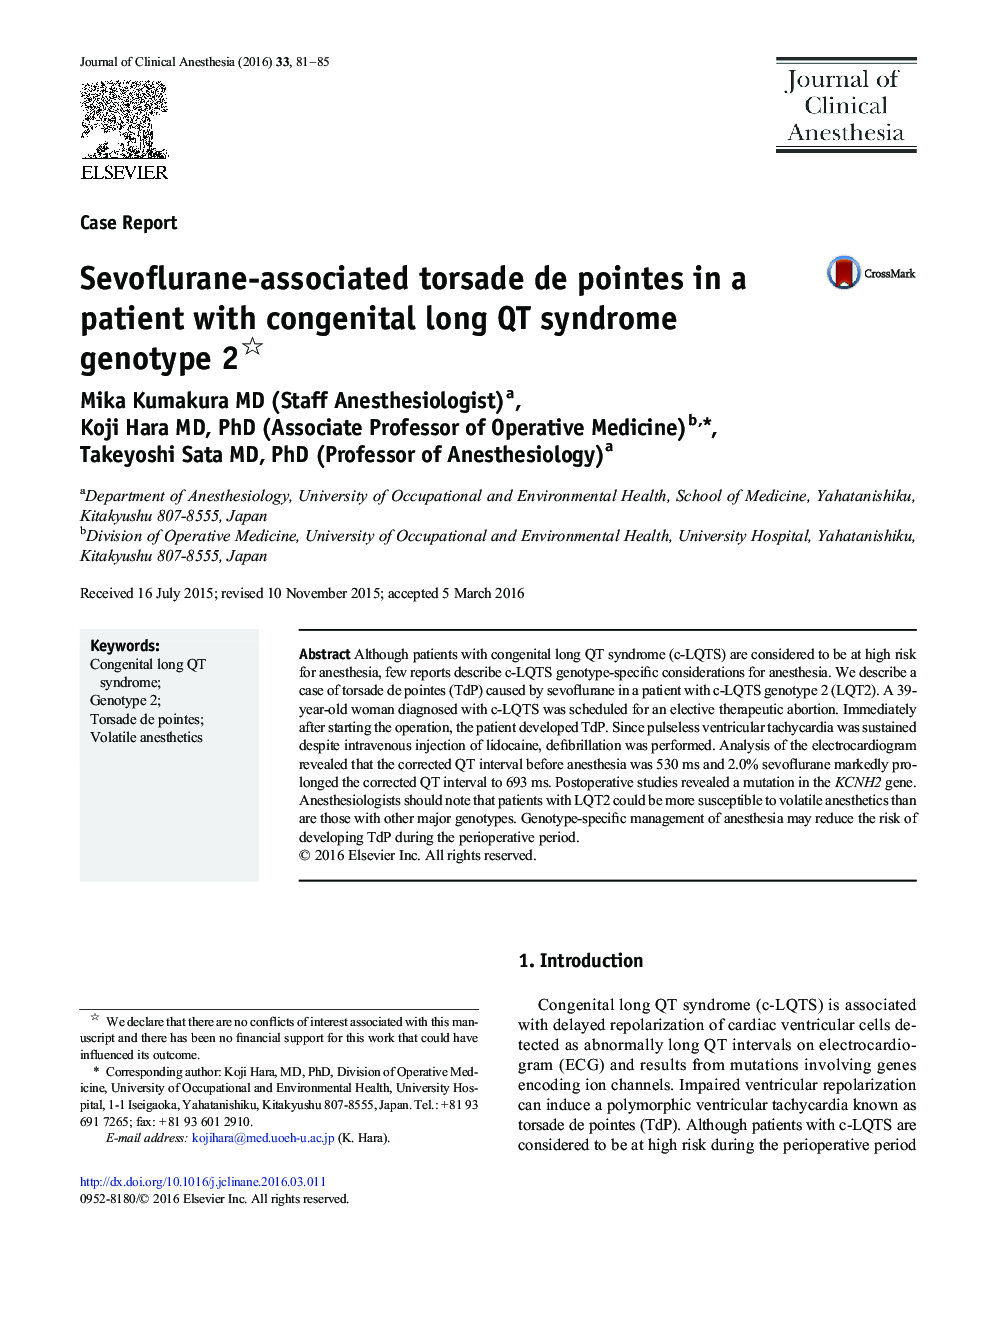 Sevoflurane-associated torsade de pointes in a patient with congenital long QT syndrome genotype 2 